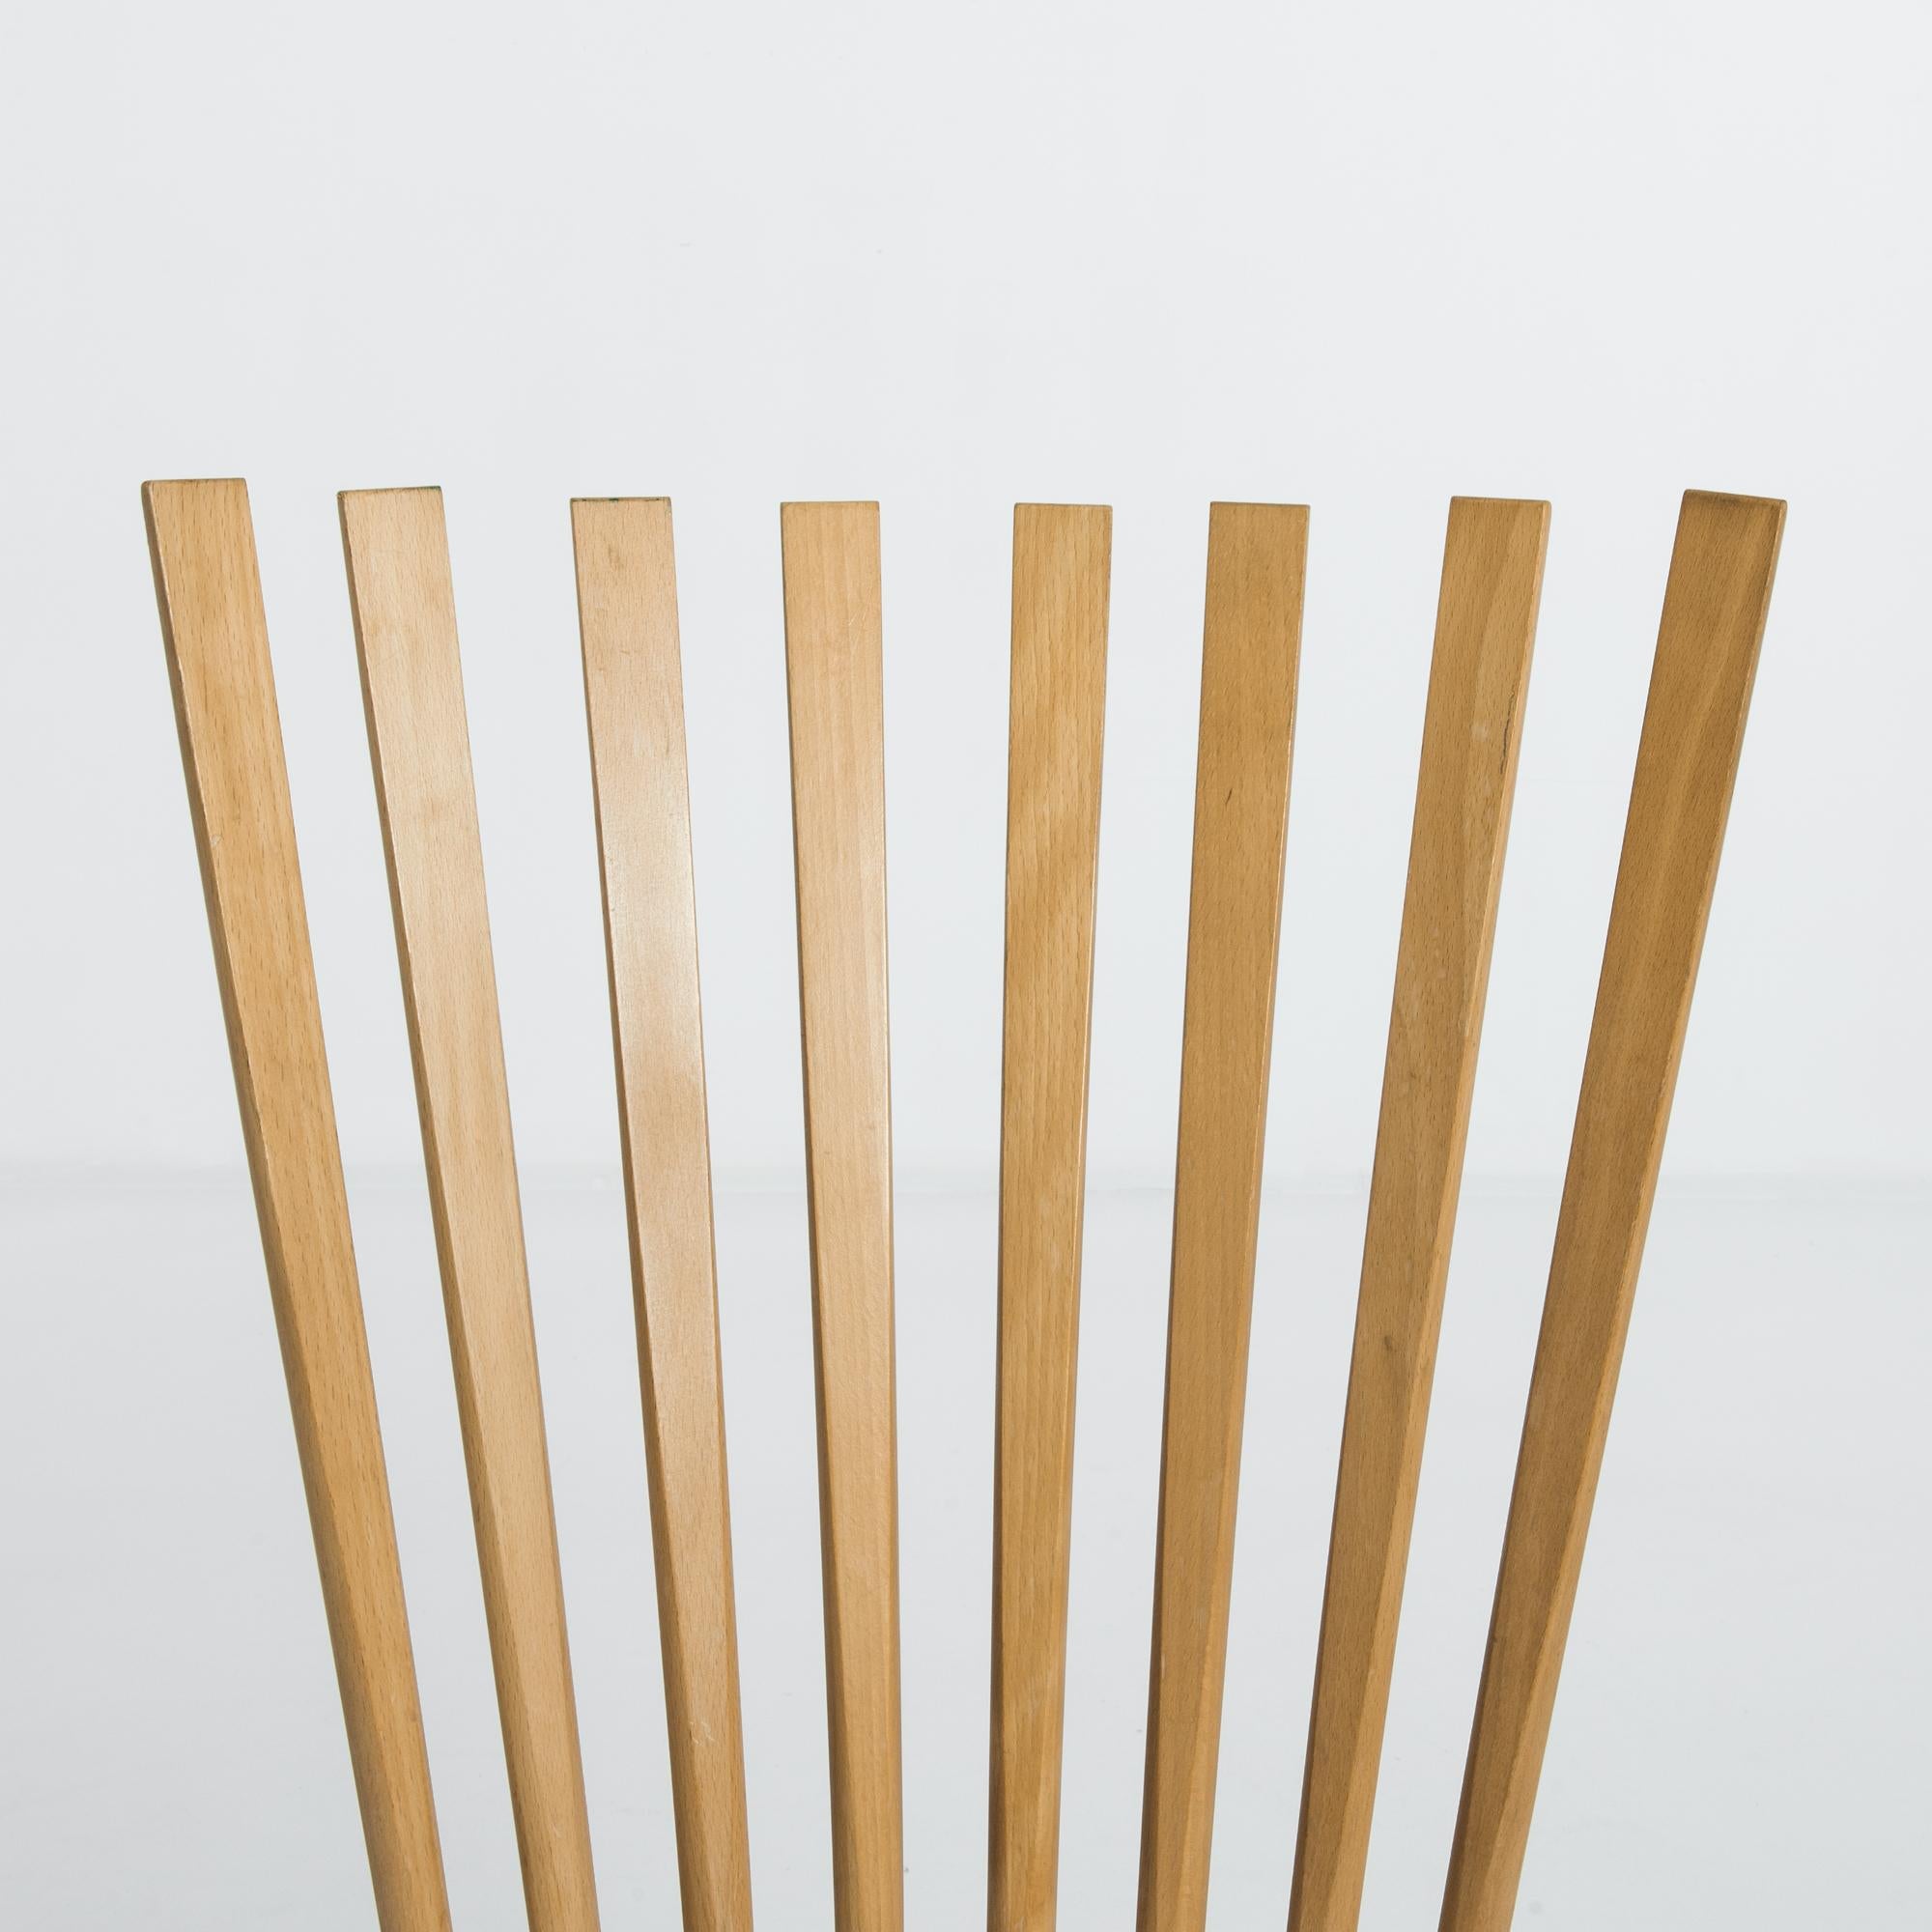 Beech 1990s 'Mikado' Chairs by J. Foersom & P. Hiort-Lorenzen, a Pair